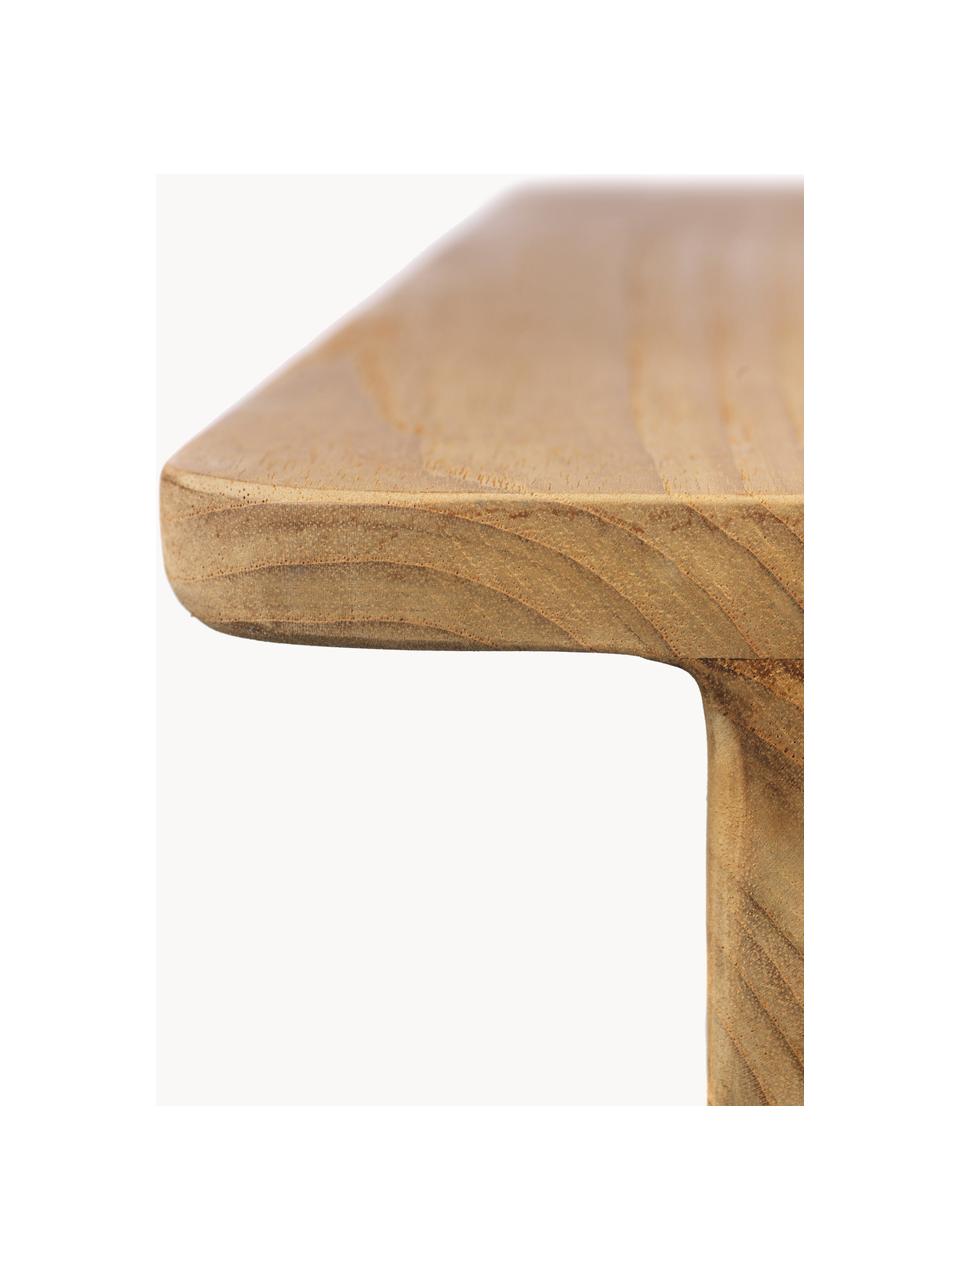 Tavolino da giardino in legno di teak Sammen, Legno di teak certificato FSC, Legno di teak, Larg. 62 x Prof. 62 cm